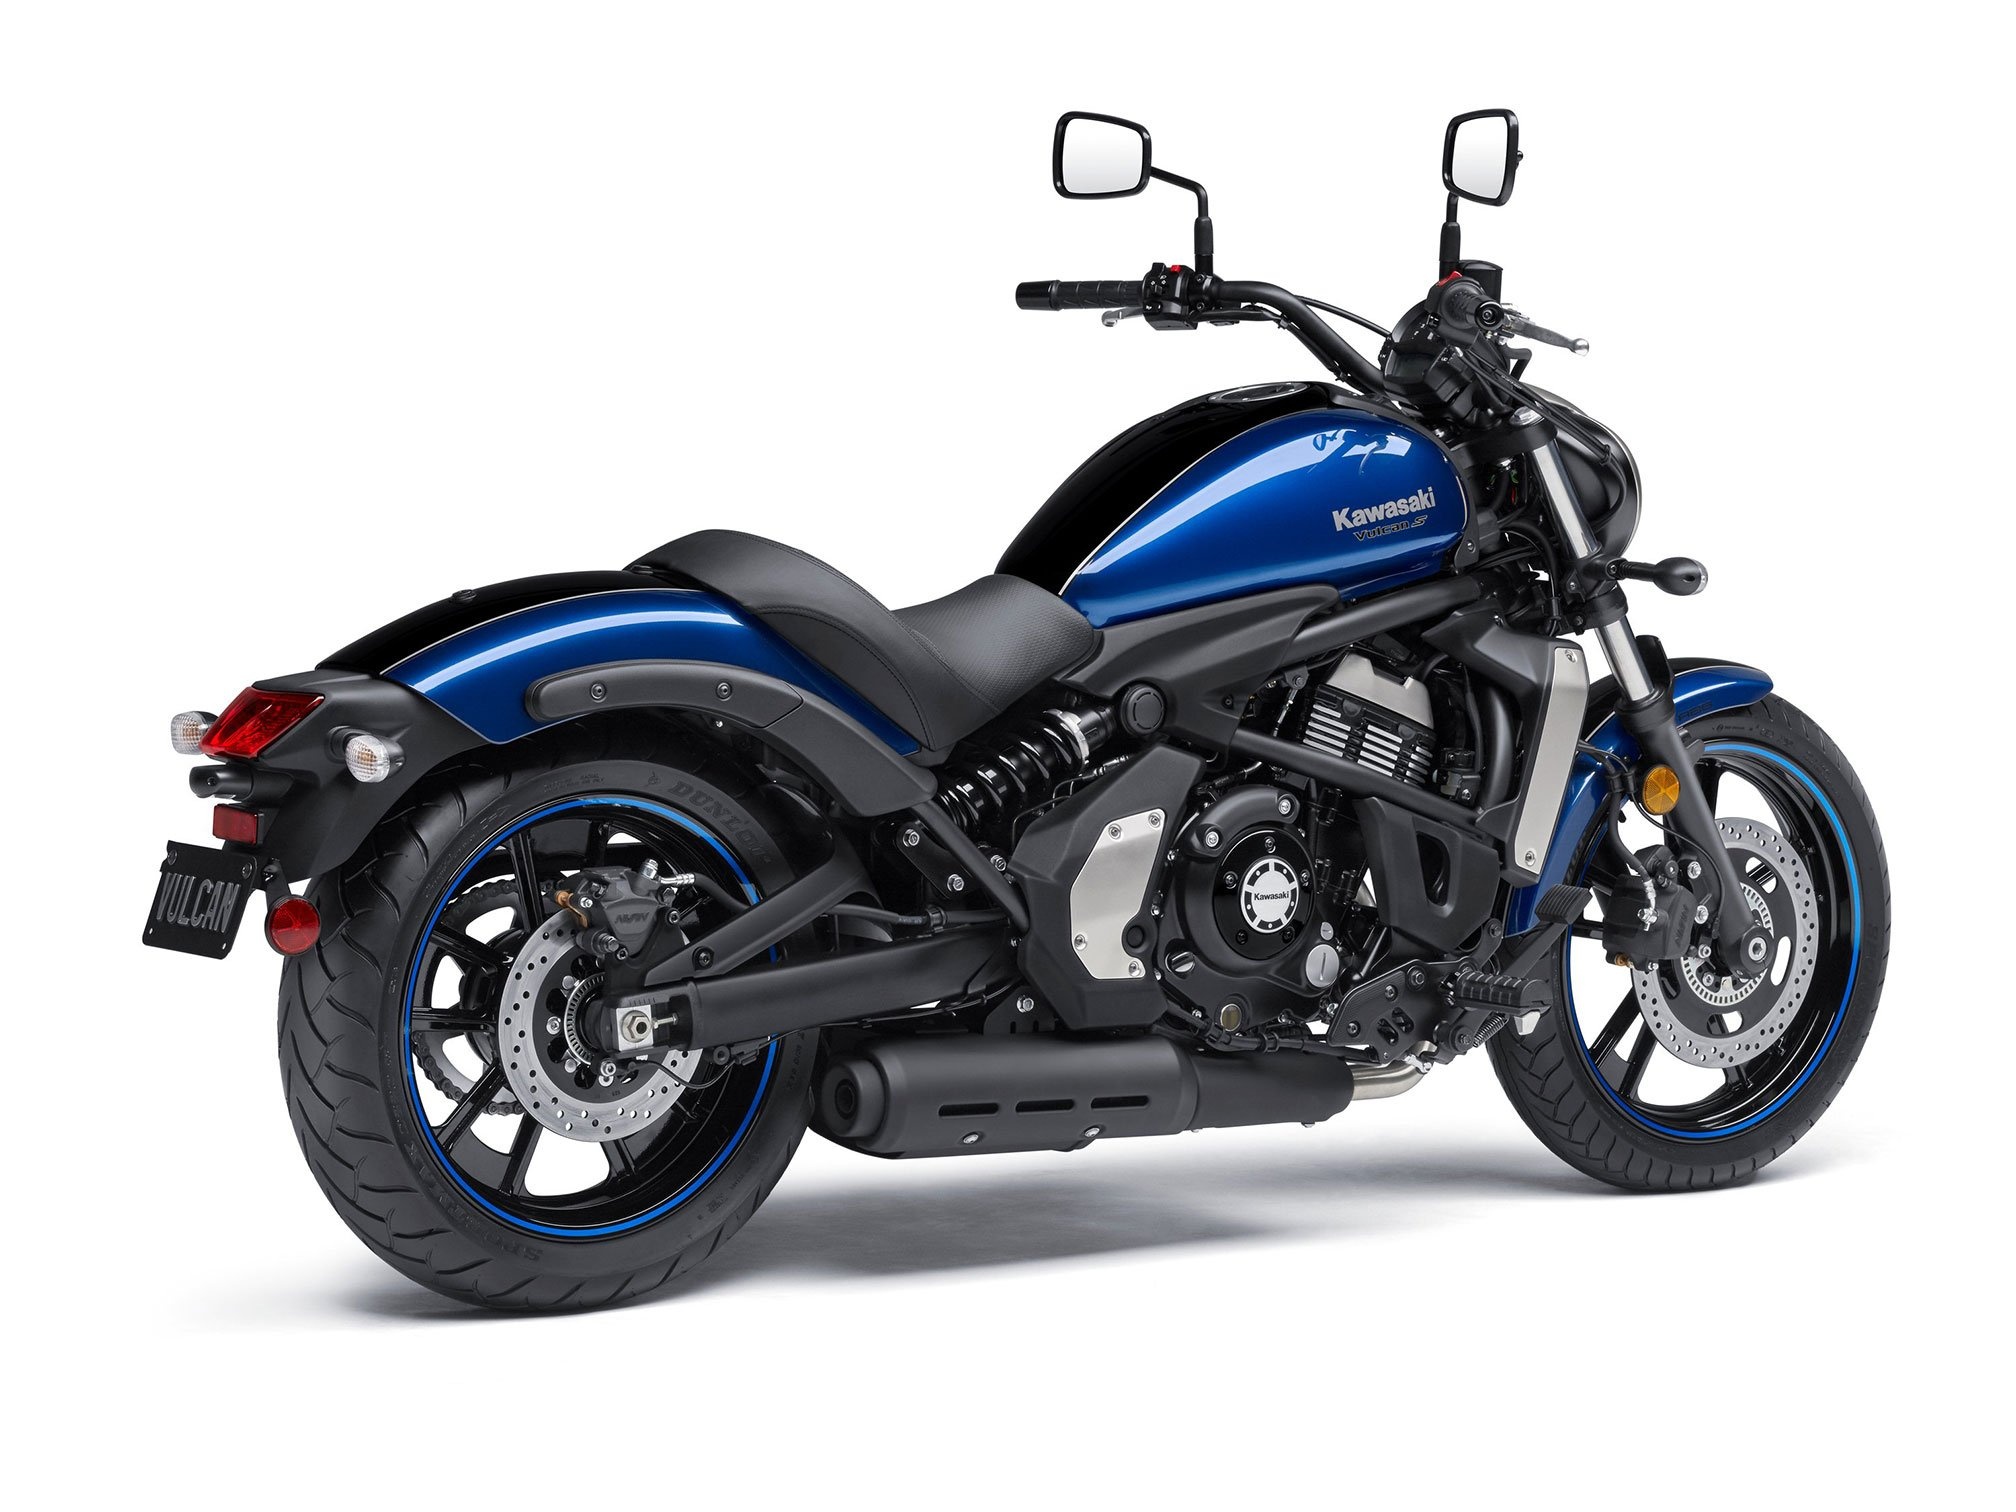 Kawasaki Vulcan S abs, Motorcycle wallpaper, Striking visuals, Cutting-edge technology, 2020x1520 HD Desktop